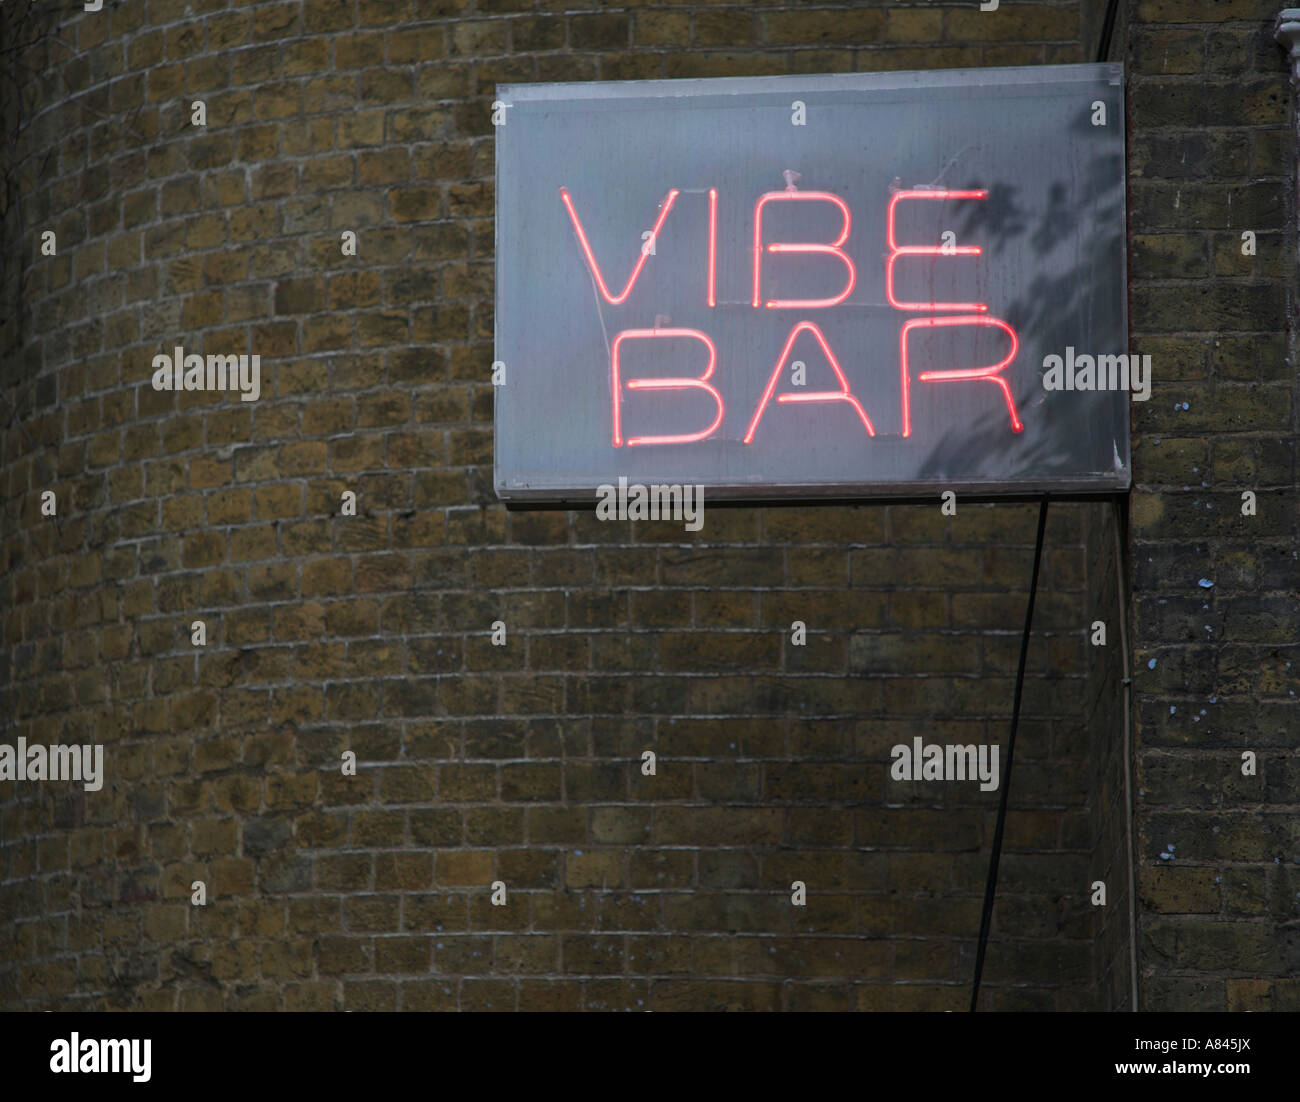 Vibe bar red neon sign Brick Lane, East End, London, England Stock Photo